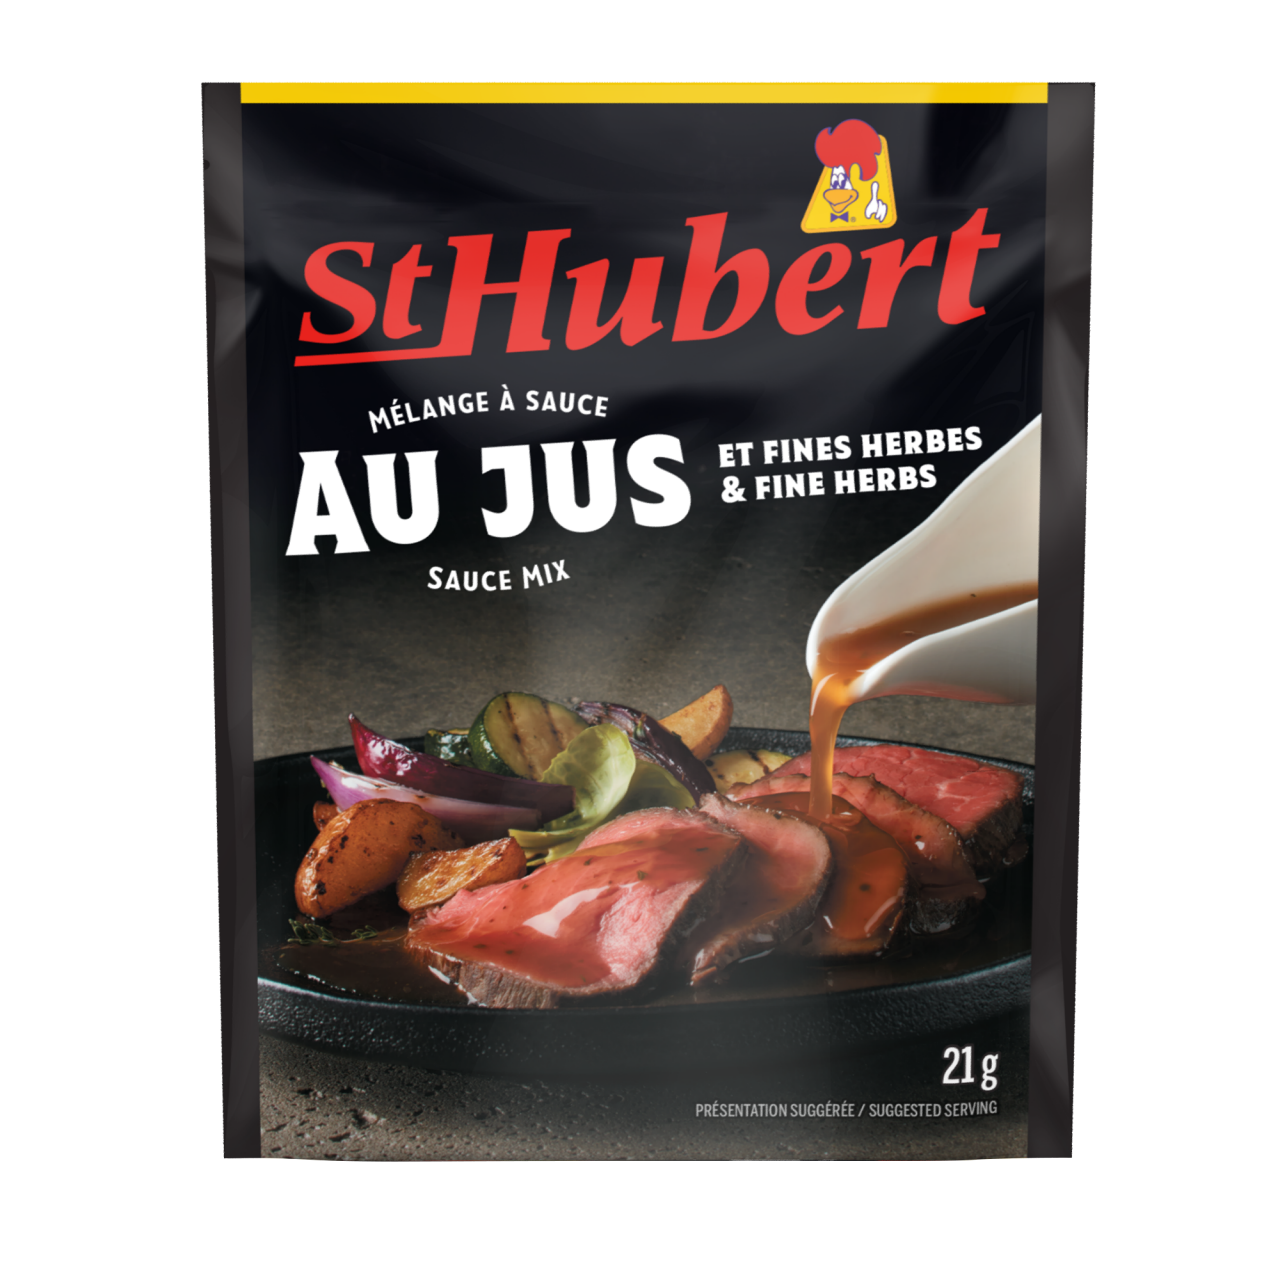 St-Hubert au juice sauce mix